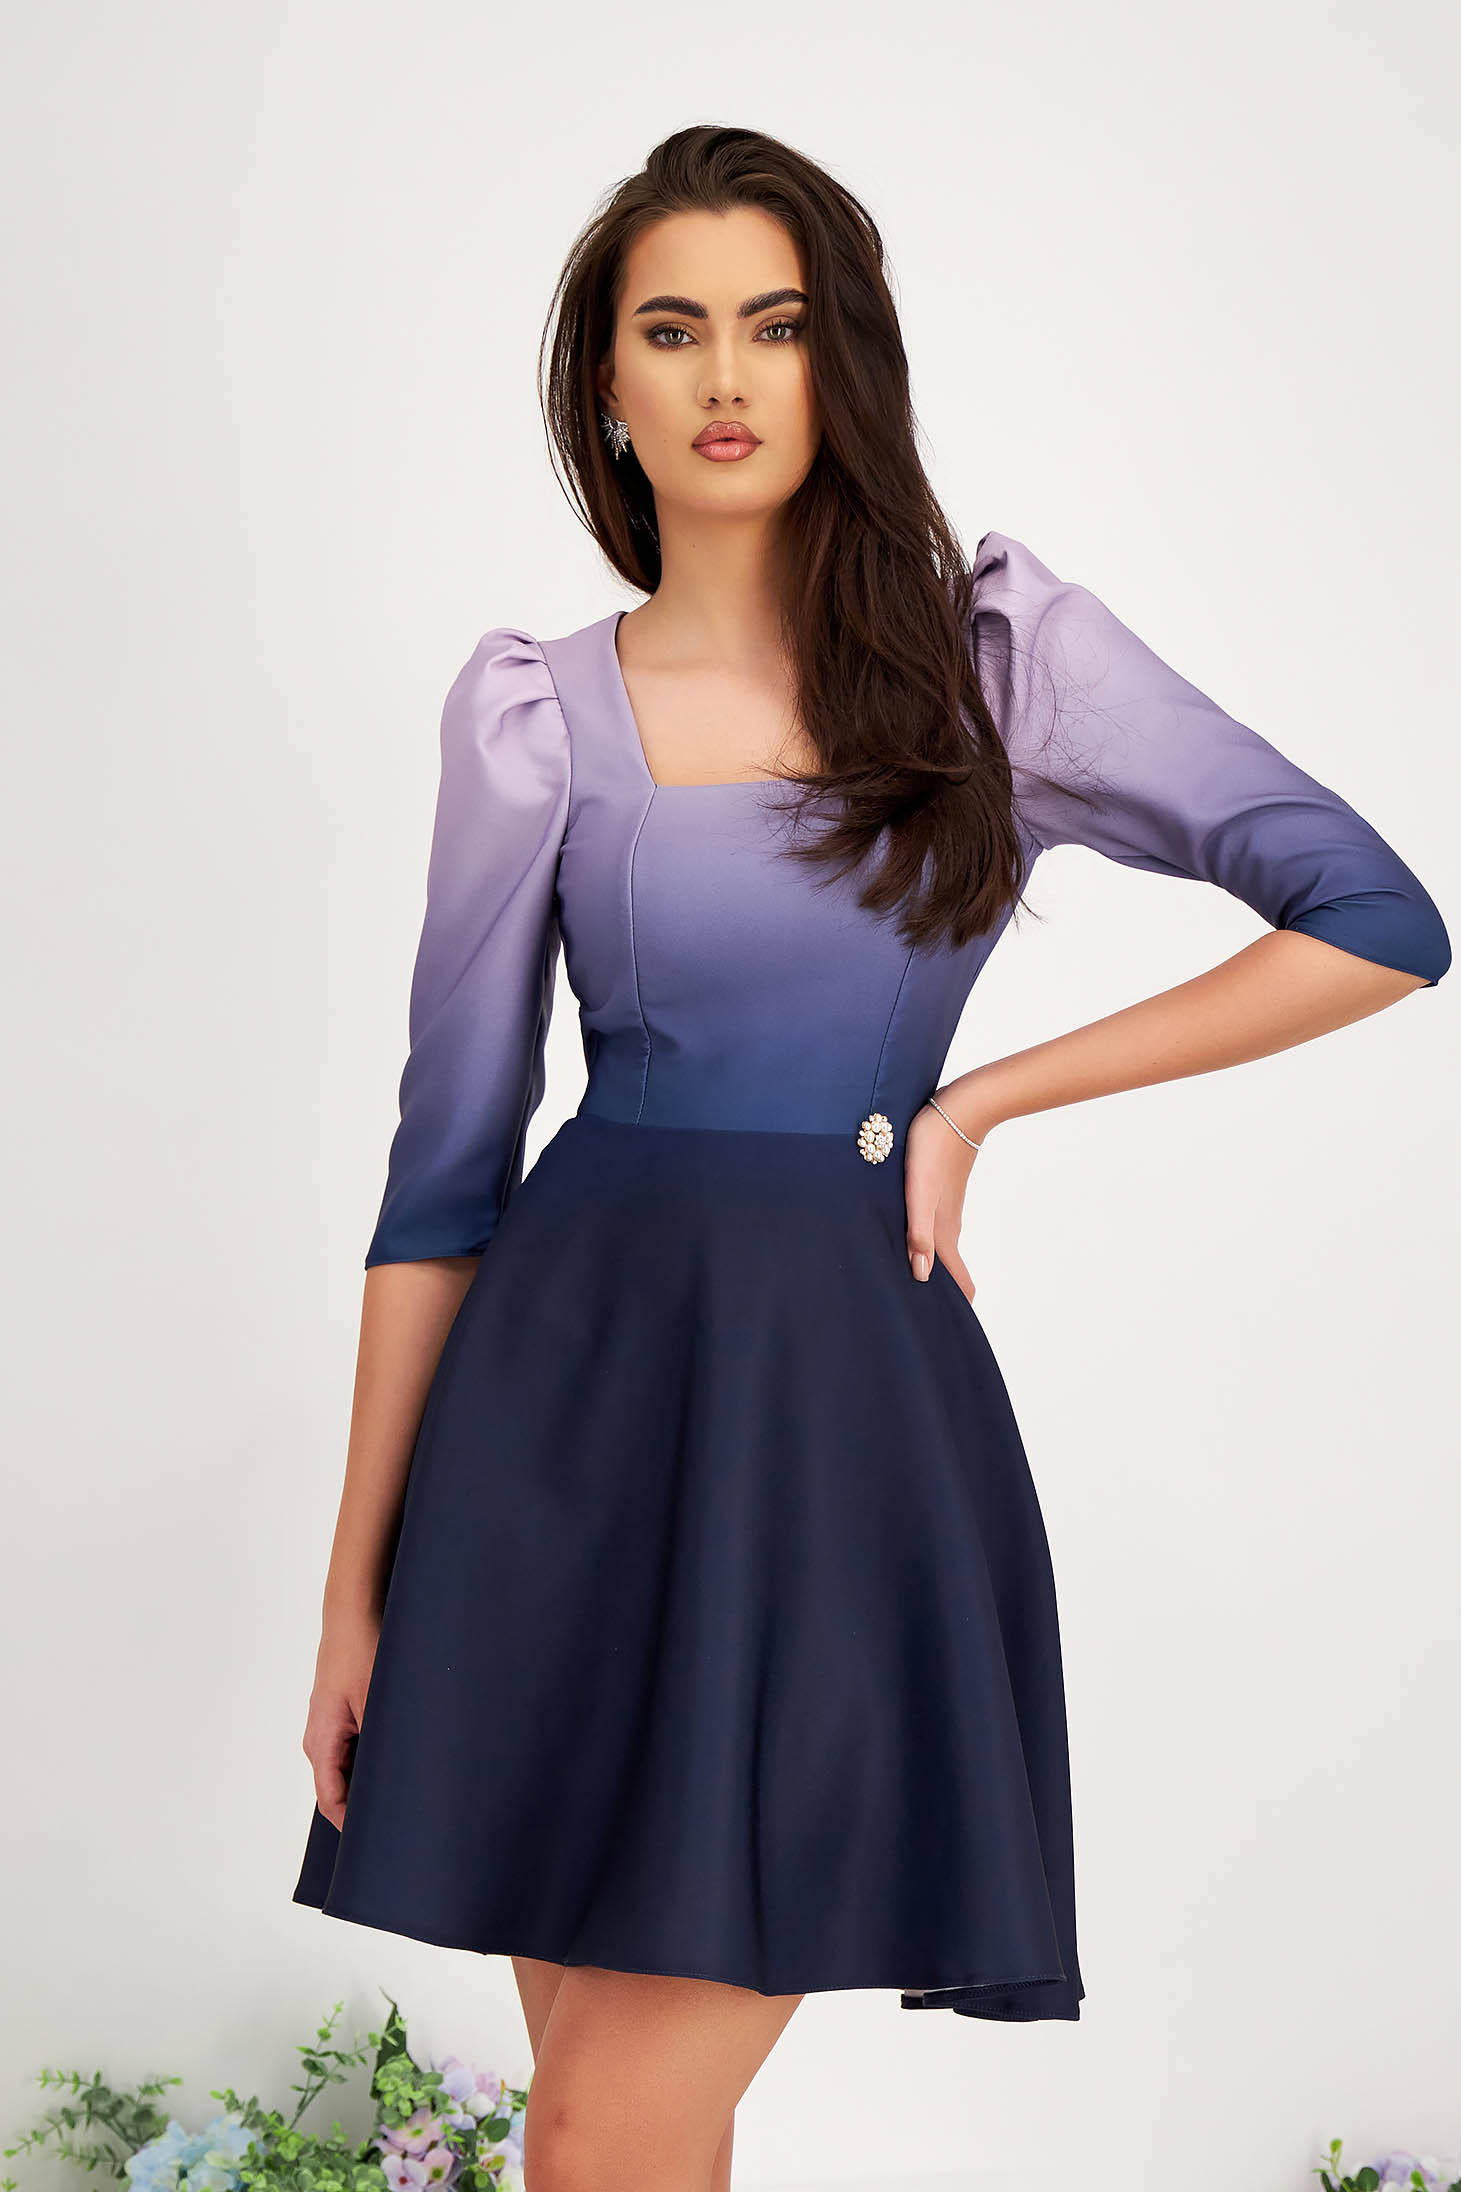 - StarShinerS purple dress short cut cloche elastic cloth high shoulders